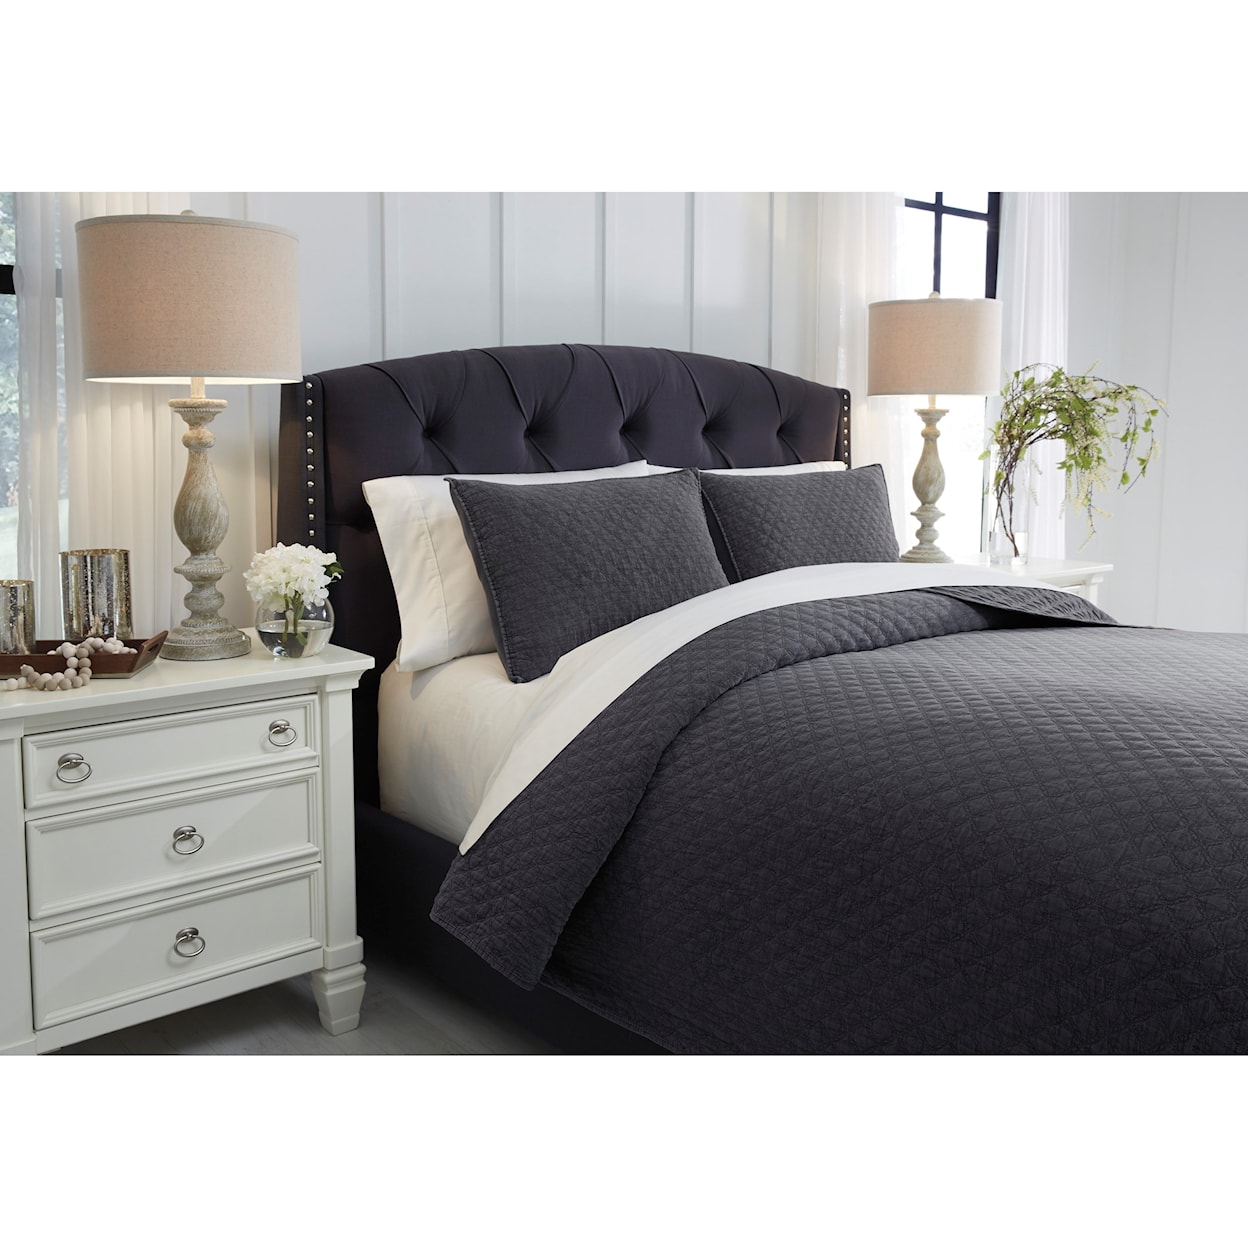 Ashley Furniture Signature Design Bedding Sets Queen Ryter Charcoal Coverlet Set